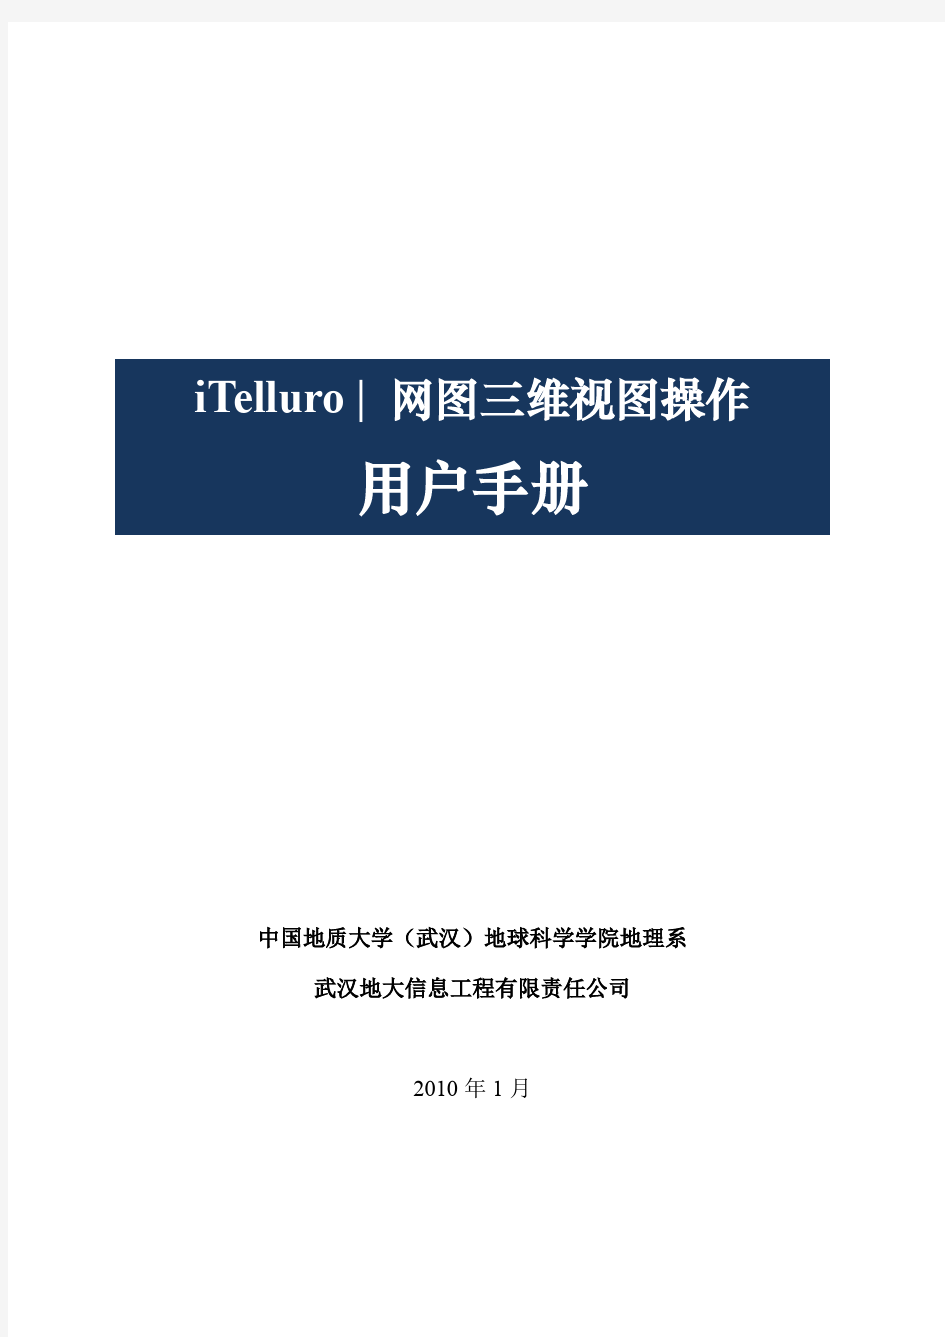 iTelluro三维操作用户手册